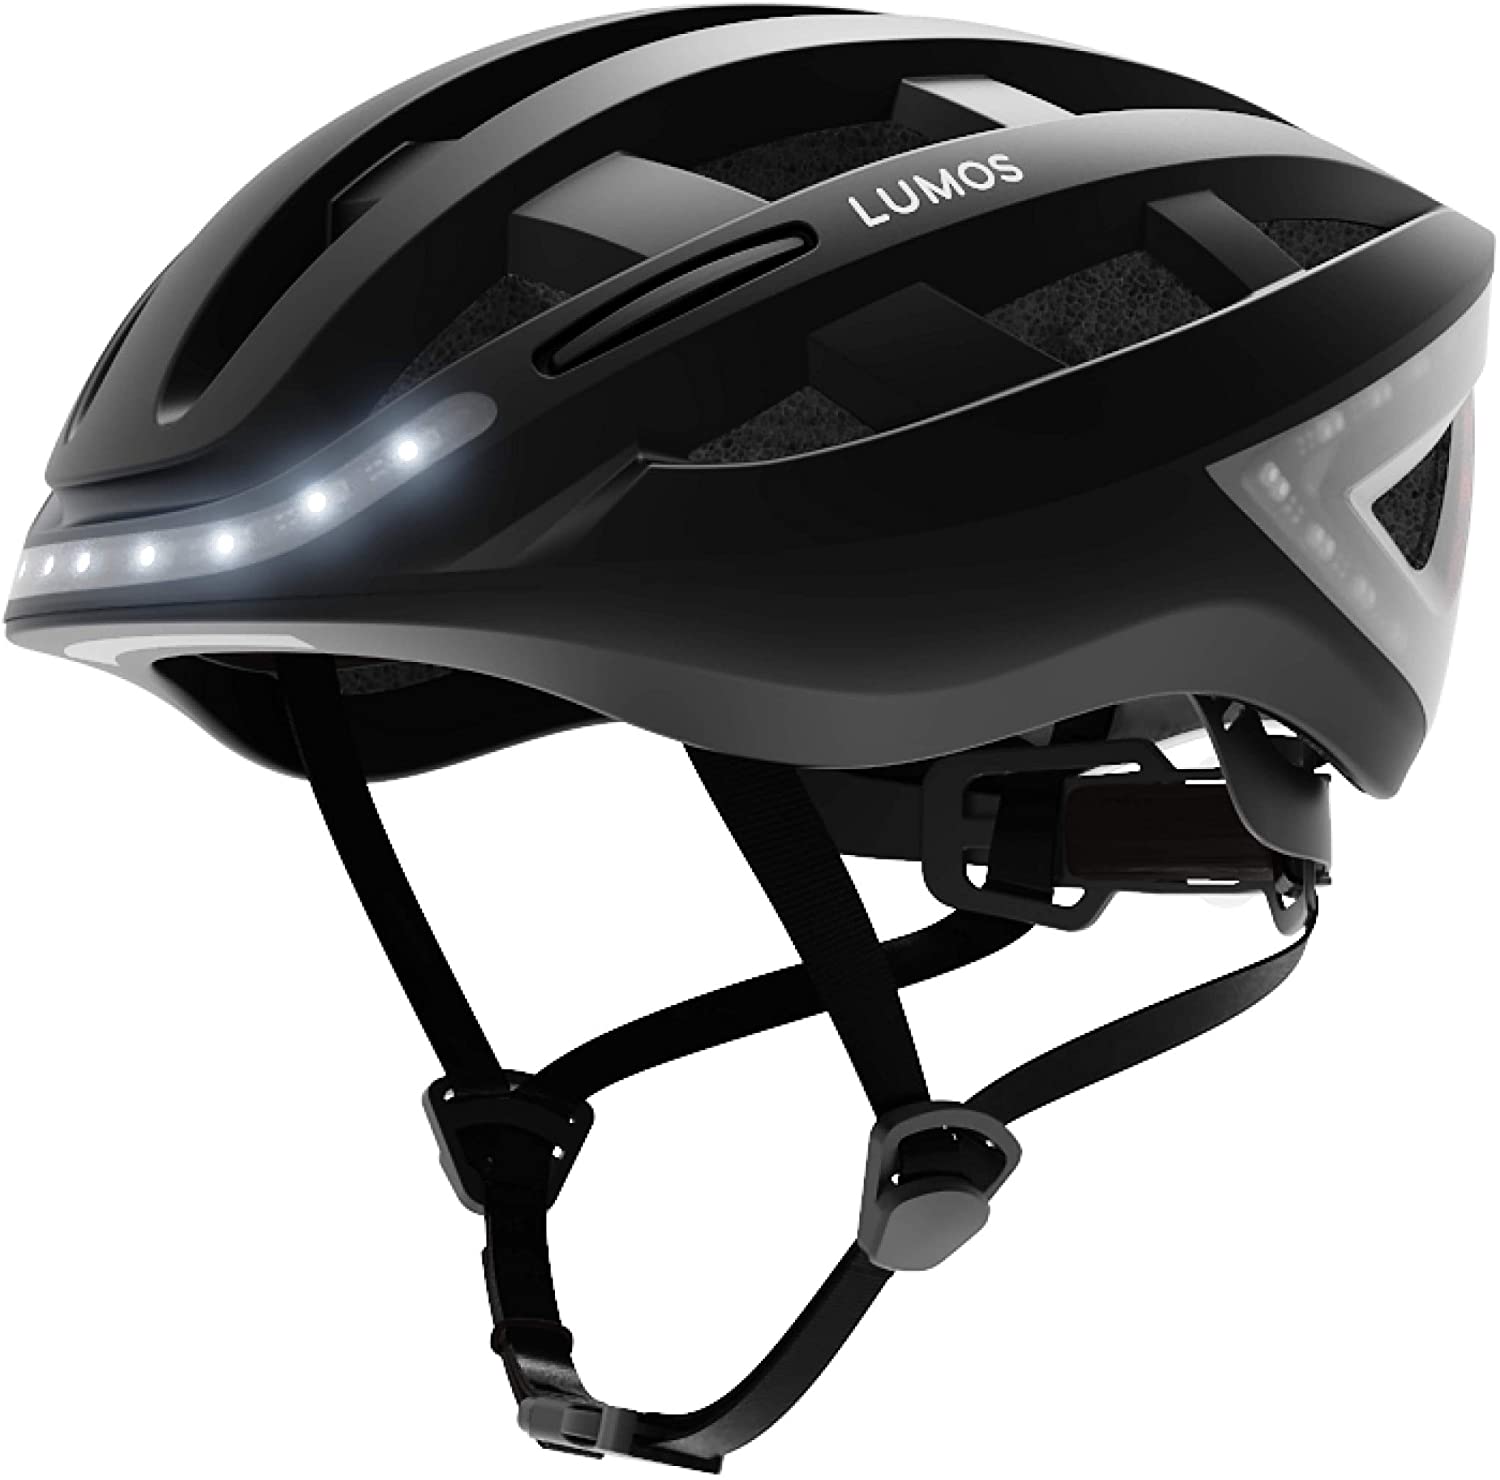 The Ultimate Smart Bike Helmet